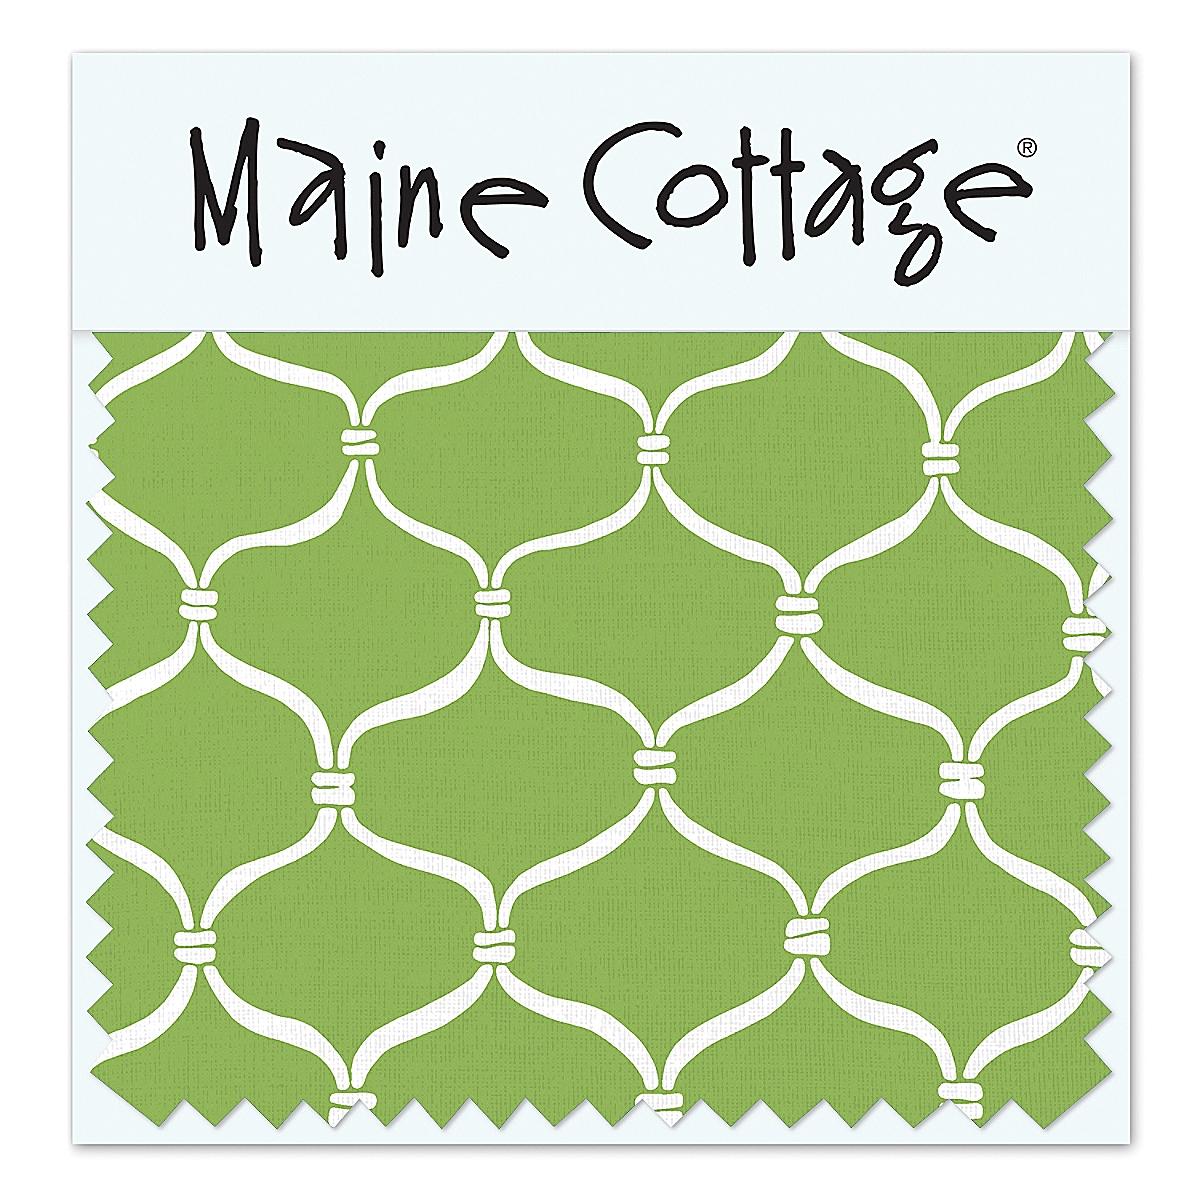 Maine Cottage Cast-a-Net: Wheatgrass Fabric Sample | Coastal Green Fabric 